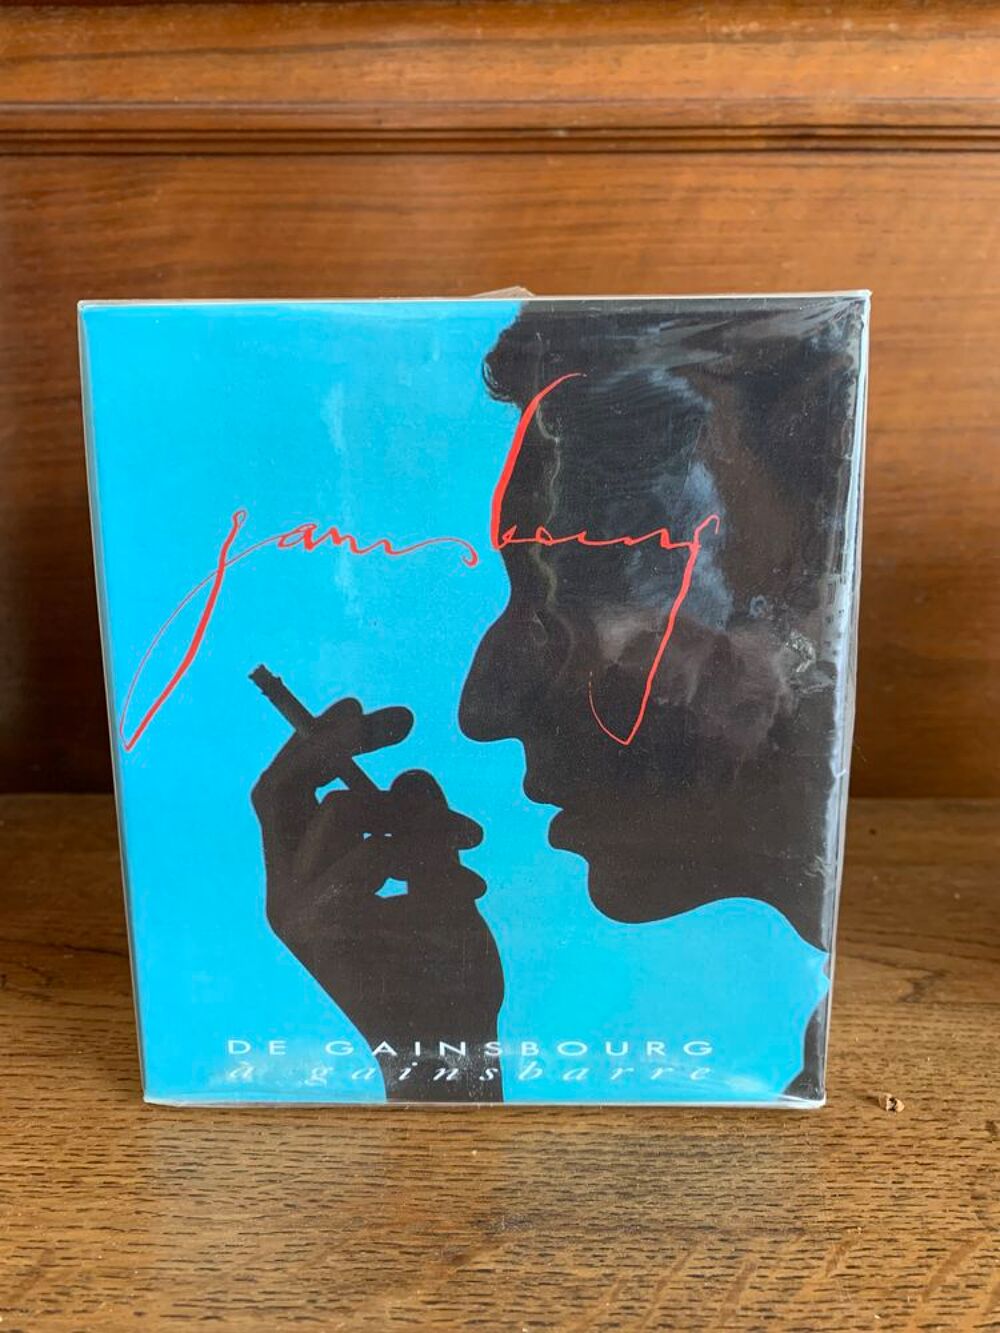 CD Gainsbourg CD et vinyles